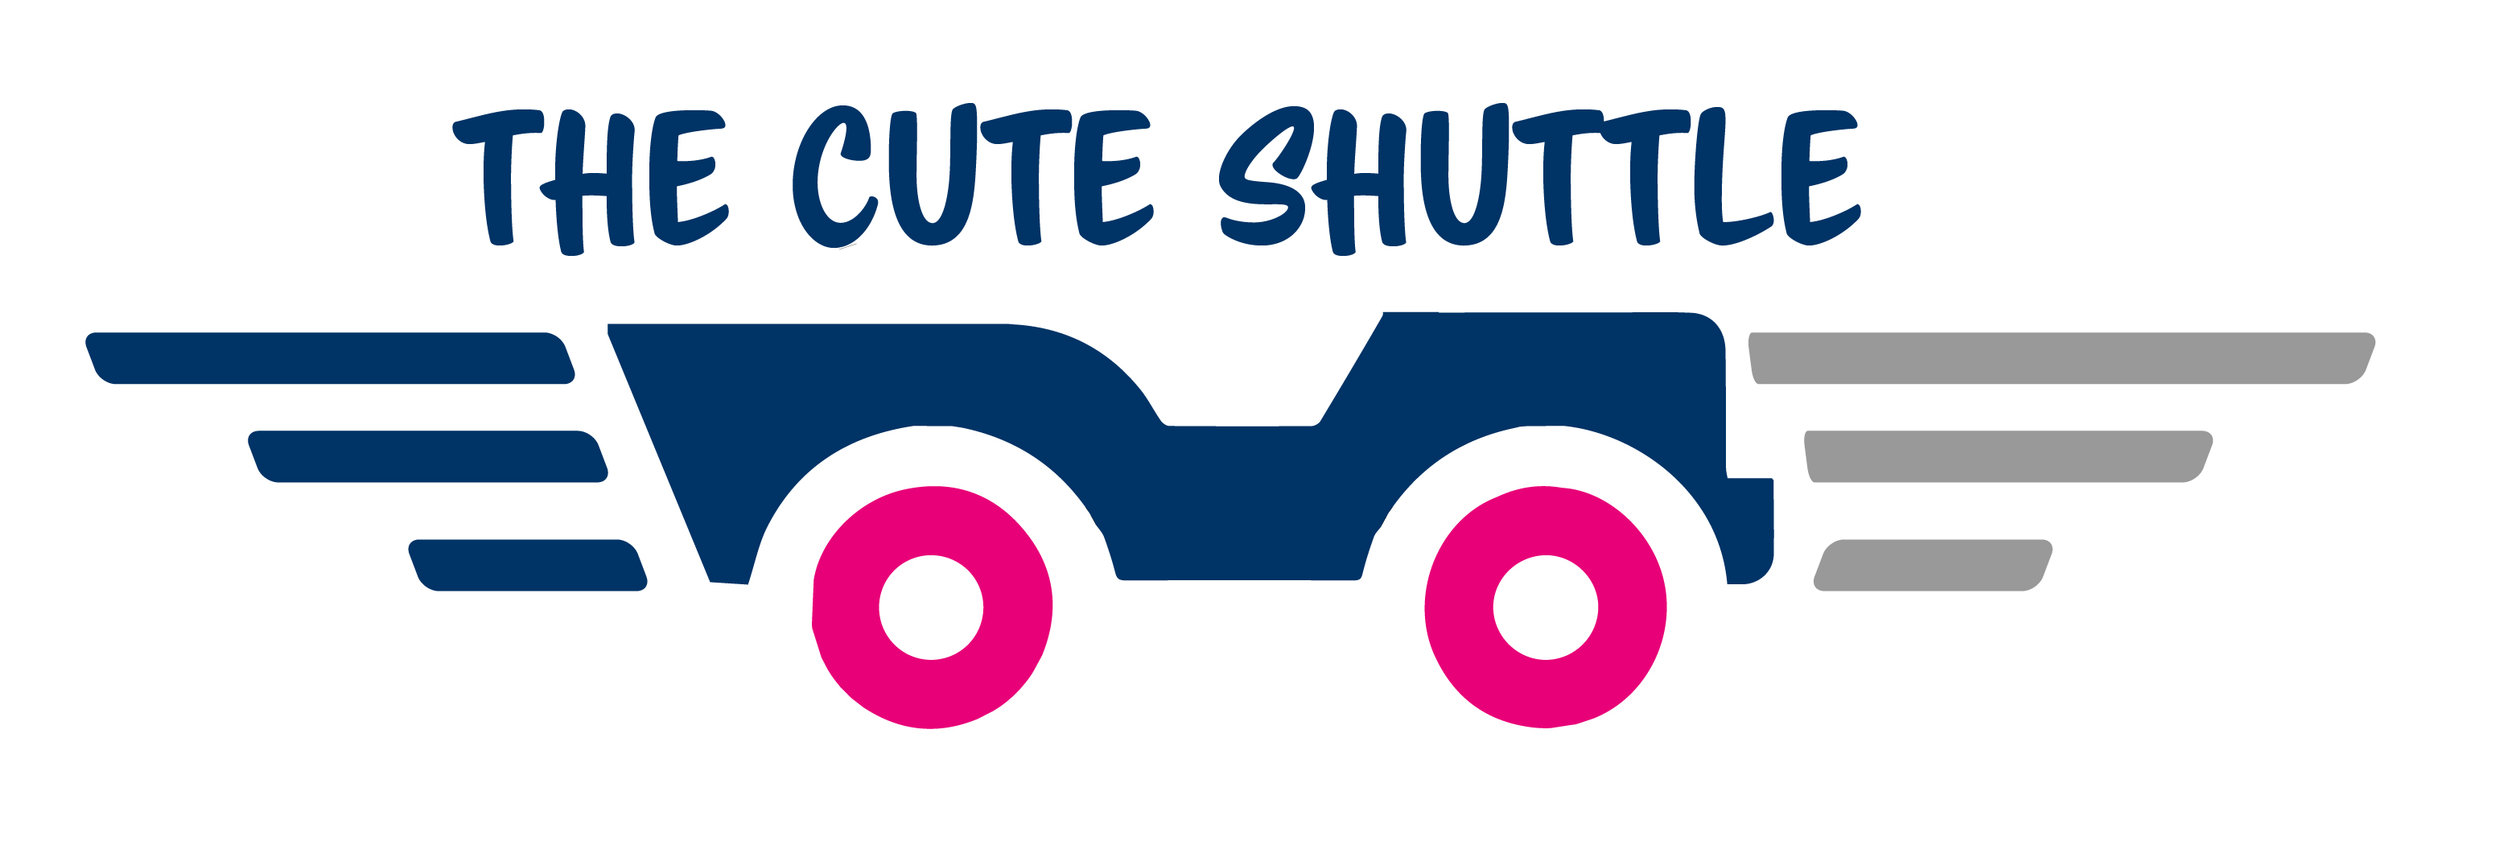 Cute Shuttle Logo.jpg